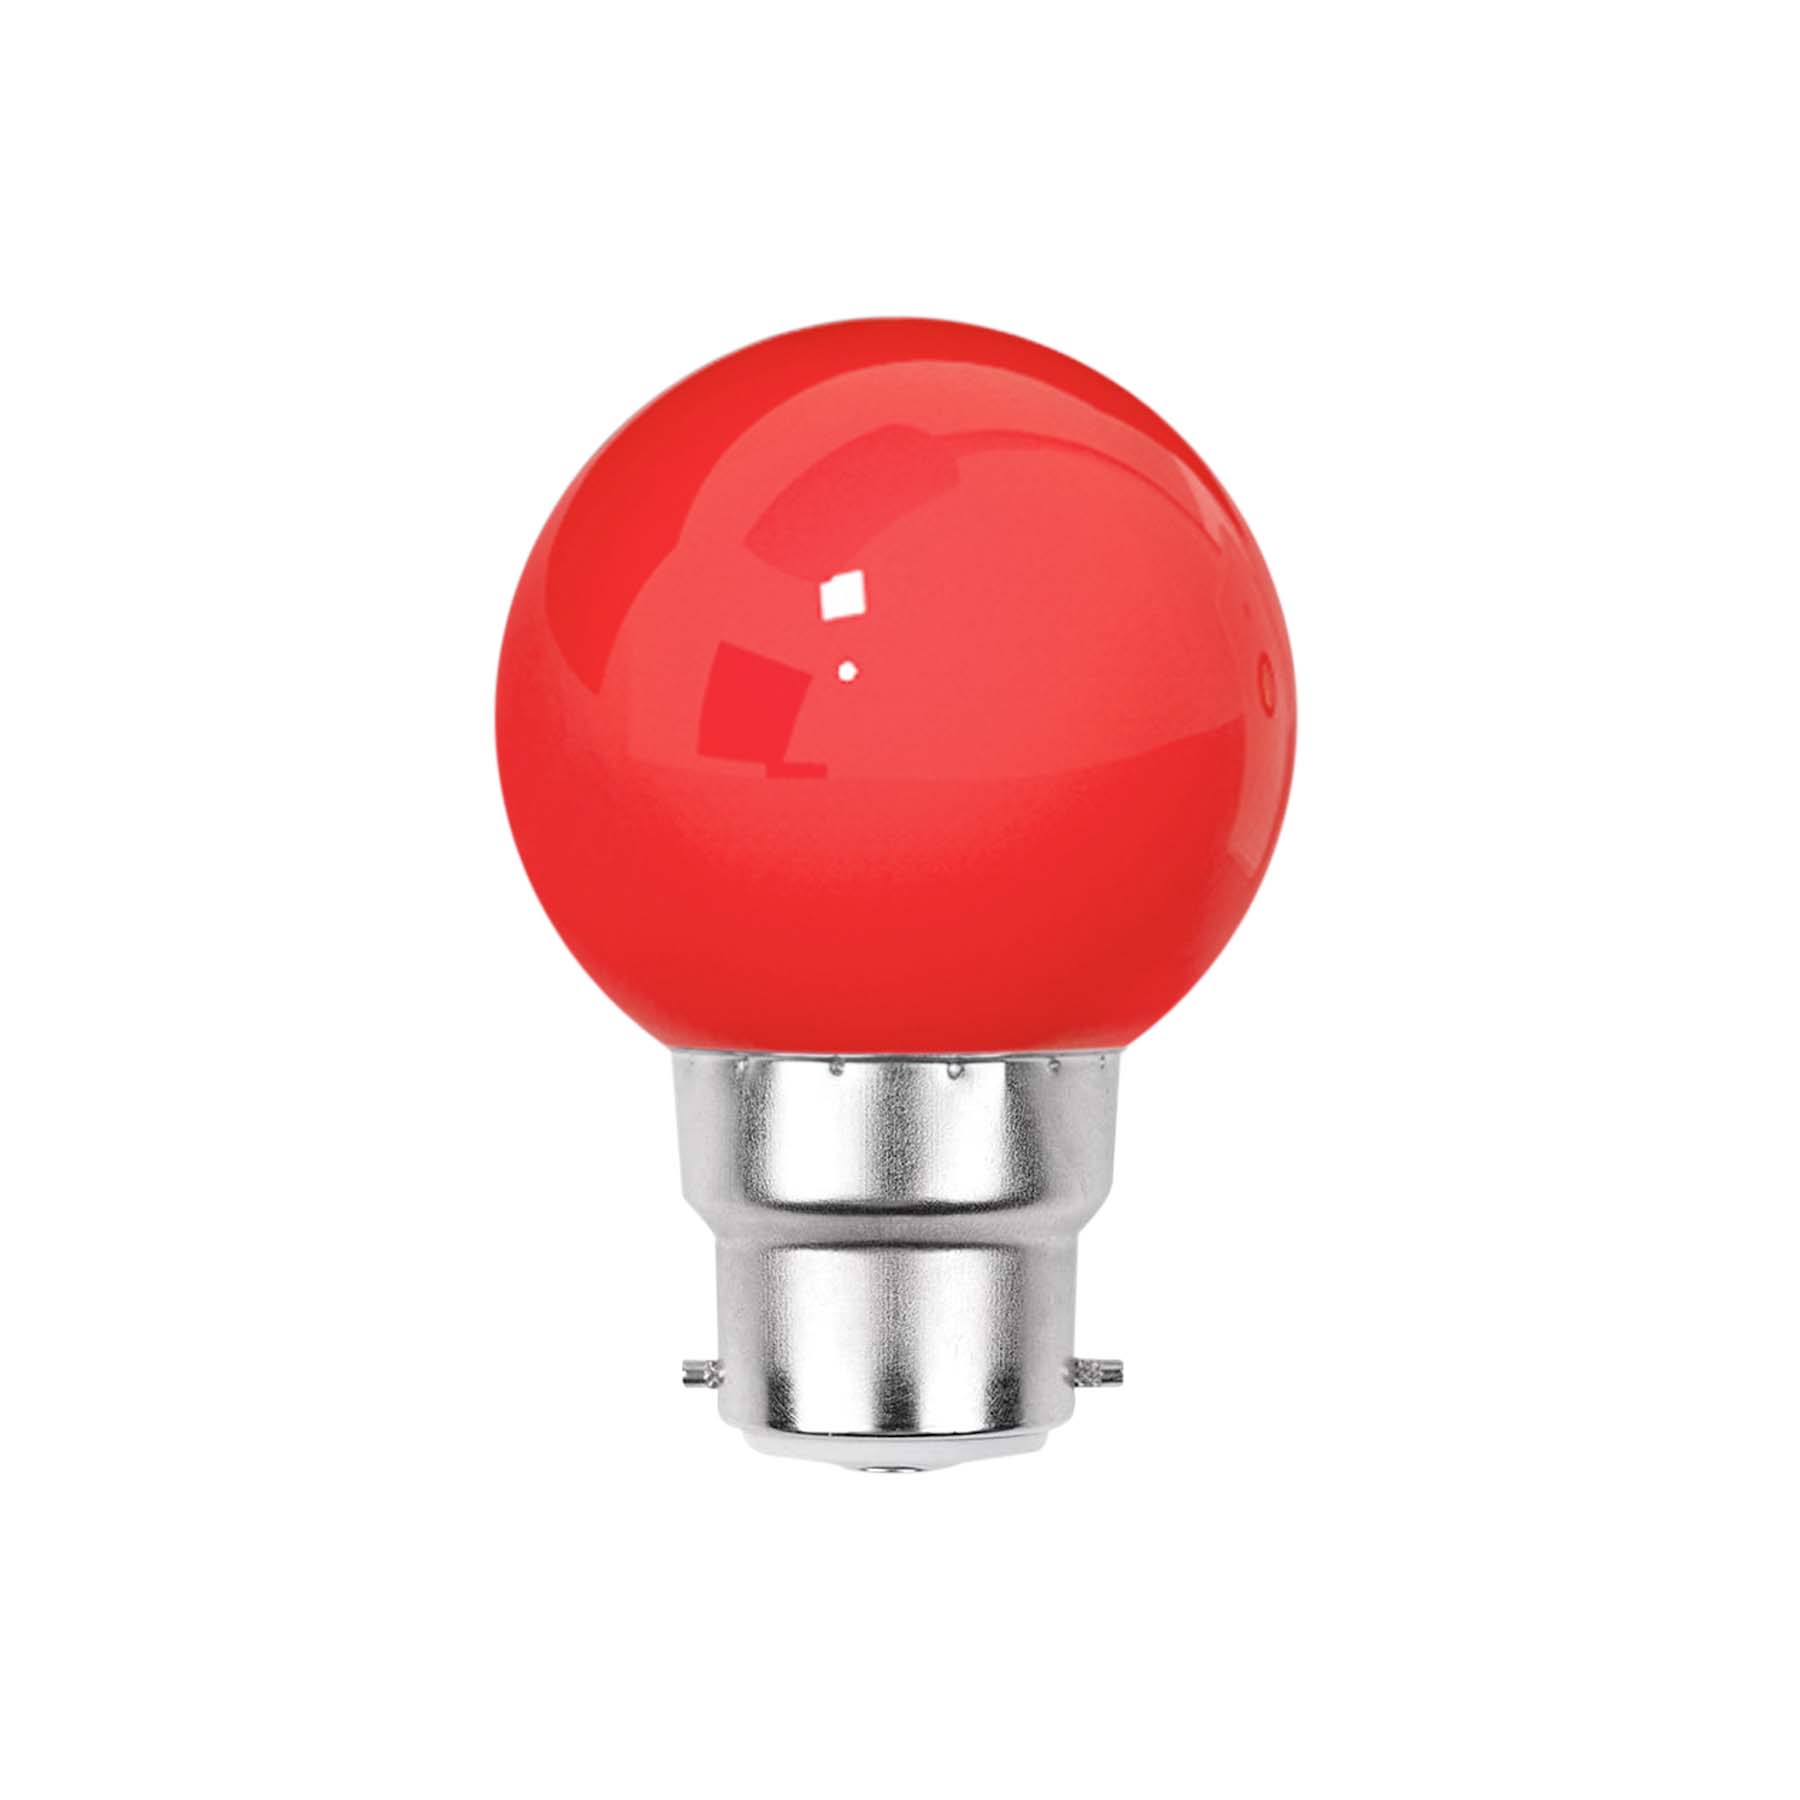 G.W.S LED Wholesale LED Bulbs B22 / Red / 5 3W B22 Bayonet LED Coloured Light Bulb Red